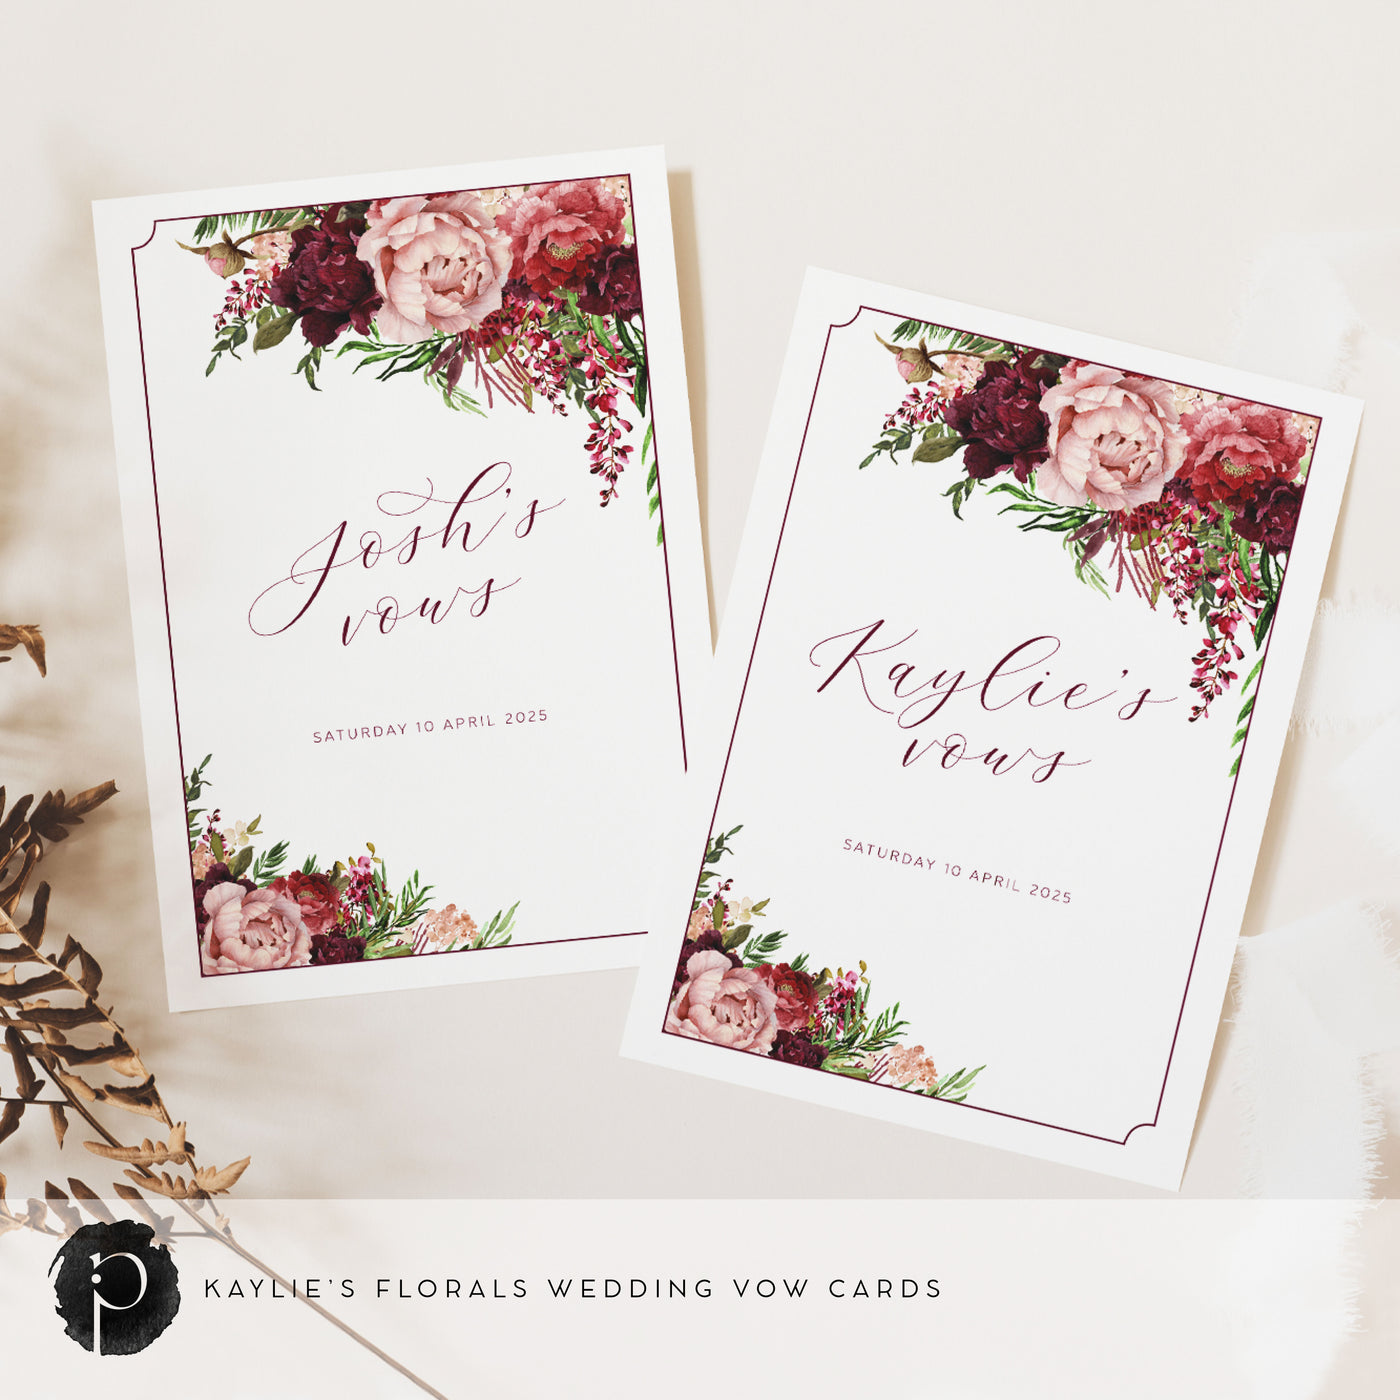 Kaylie's Florals - Wedding Vow Card Set